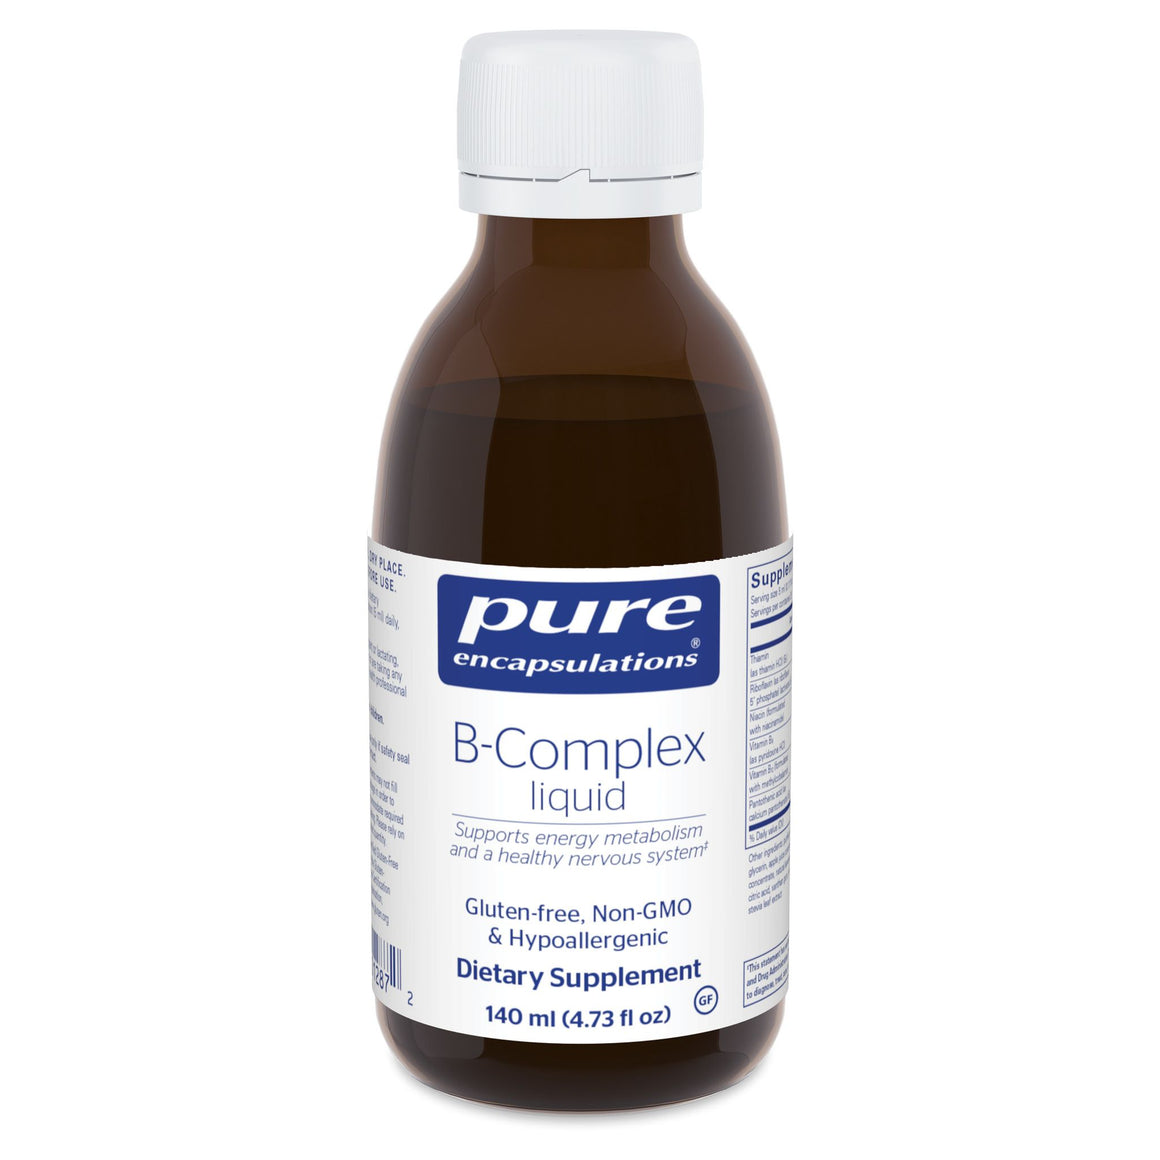 B-Complex liquid - Pure Encapsulations - 140 ml